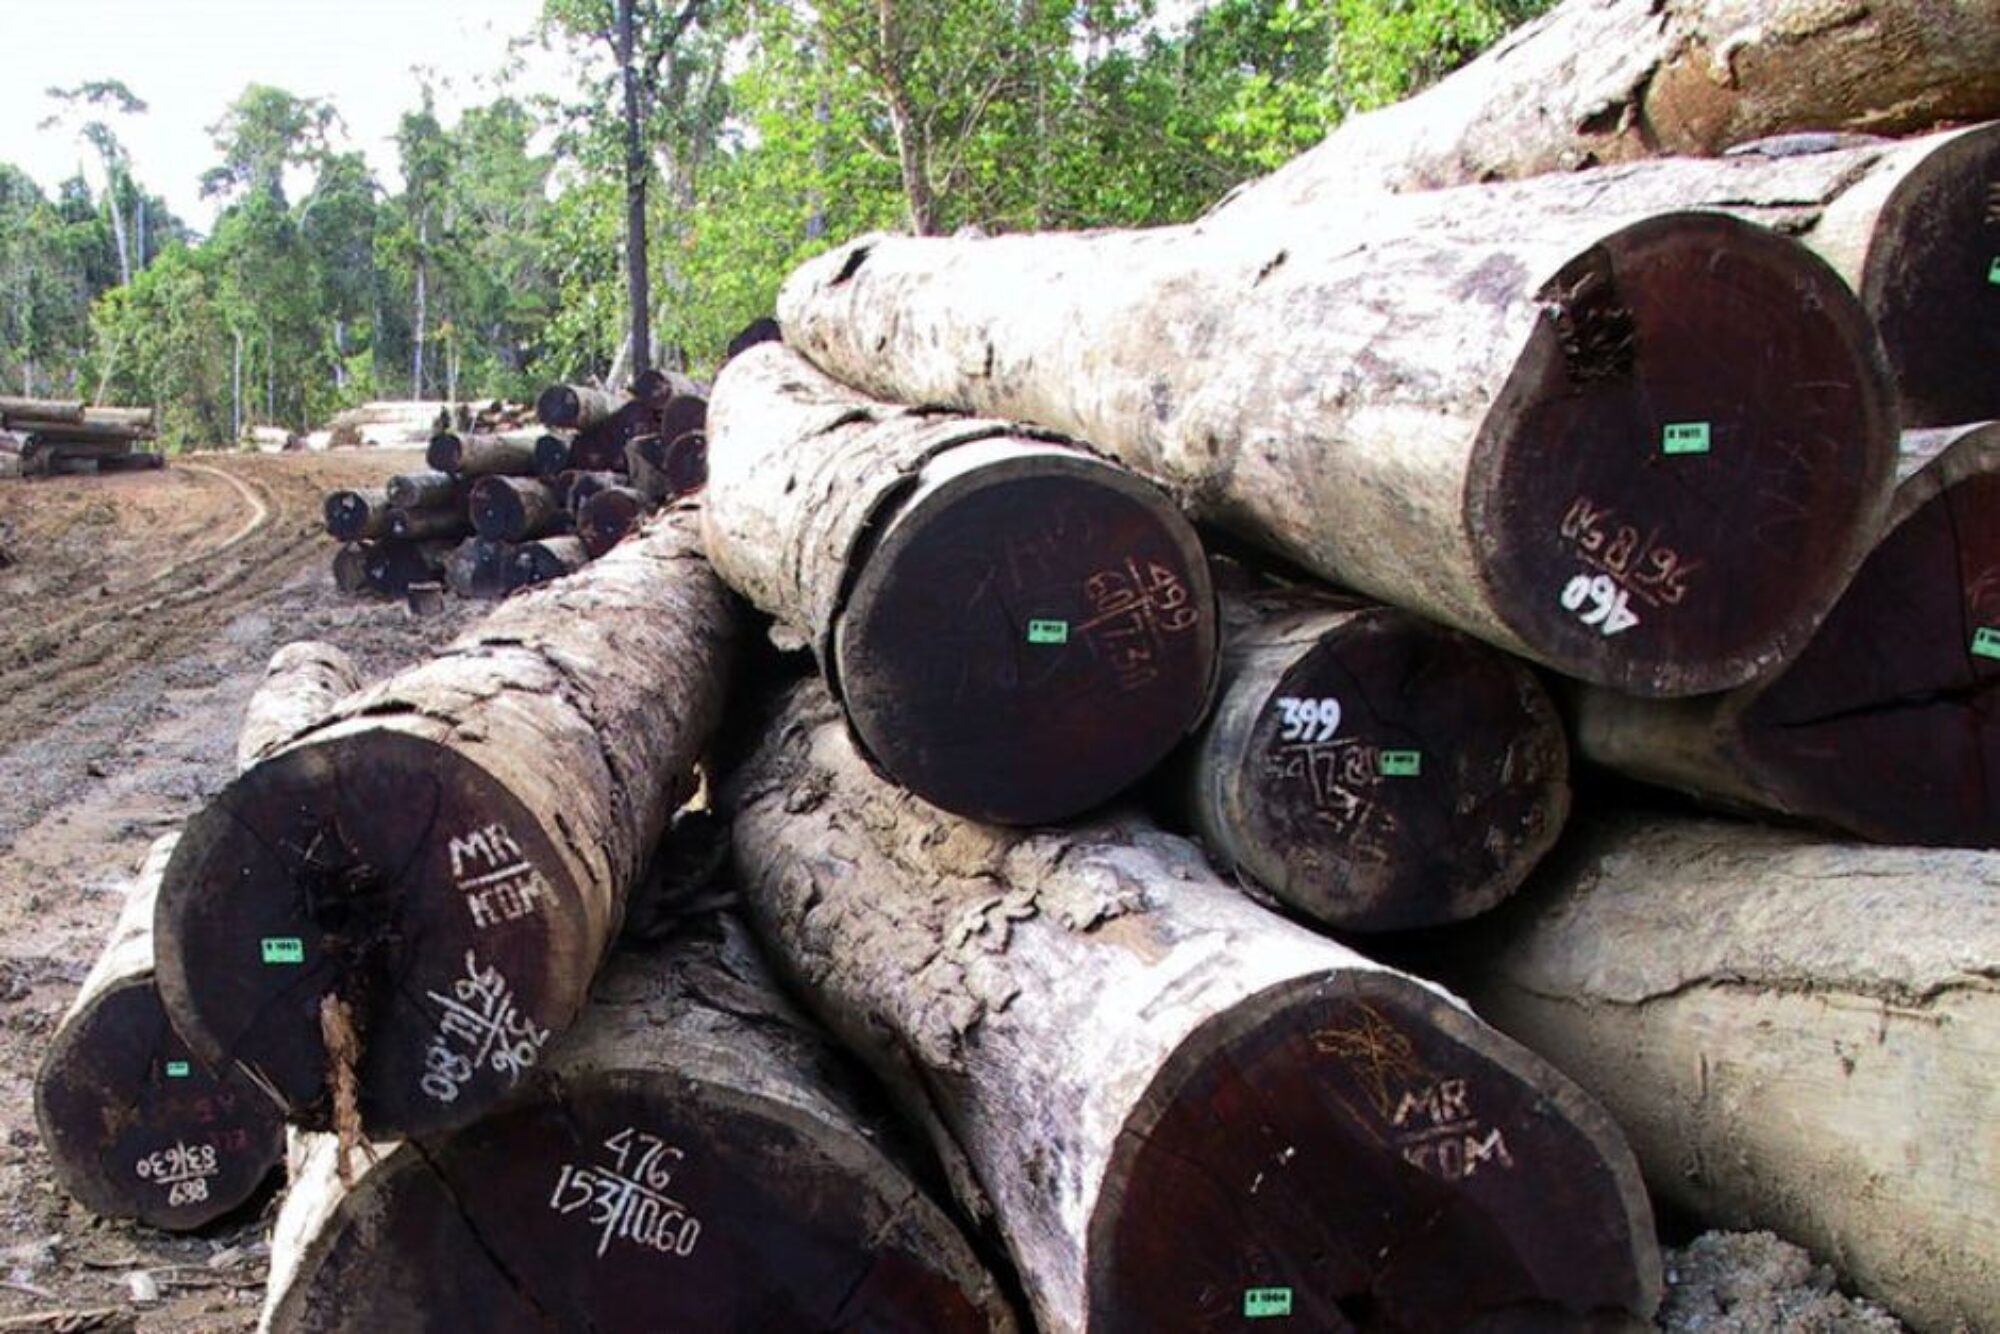 Merbau Hardwood Is Under Severe Threat Of Extinction